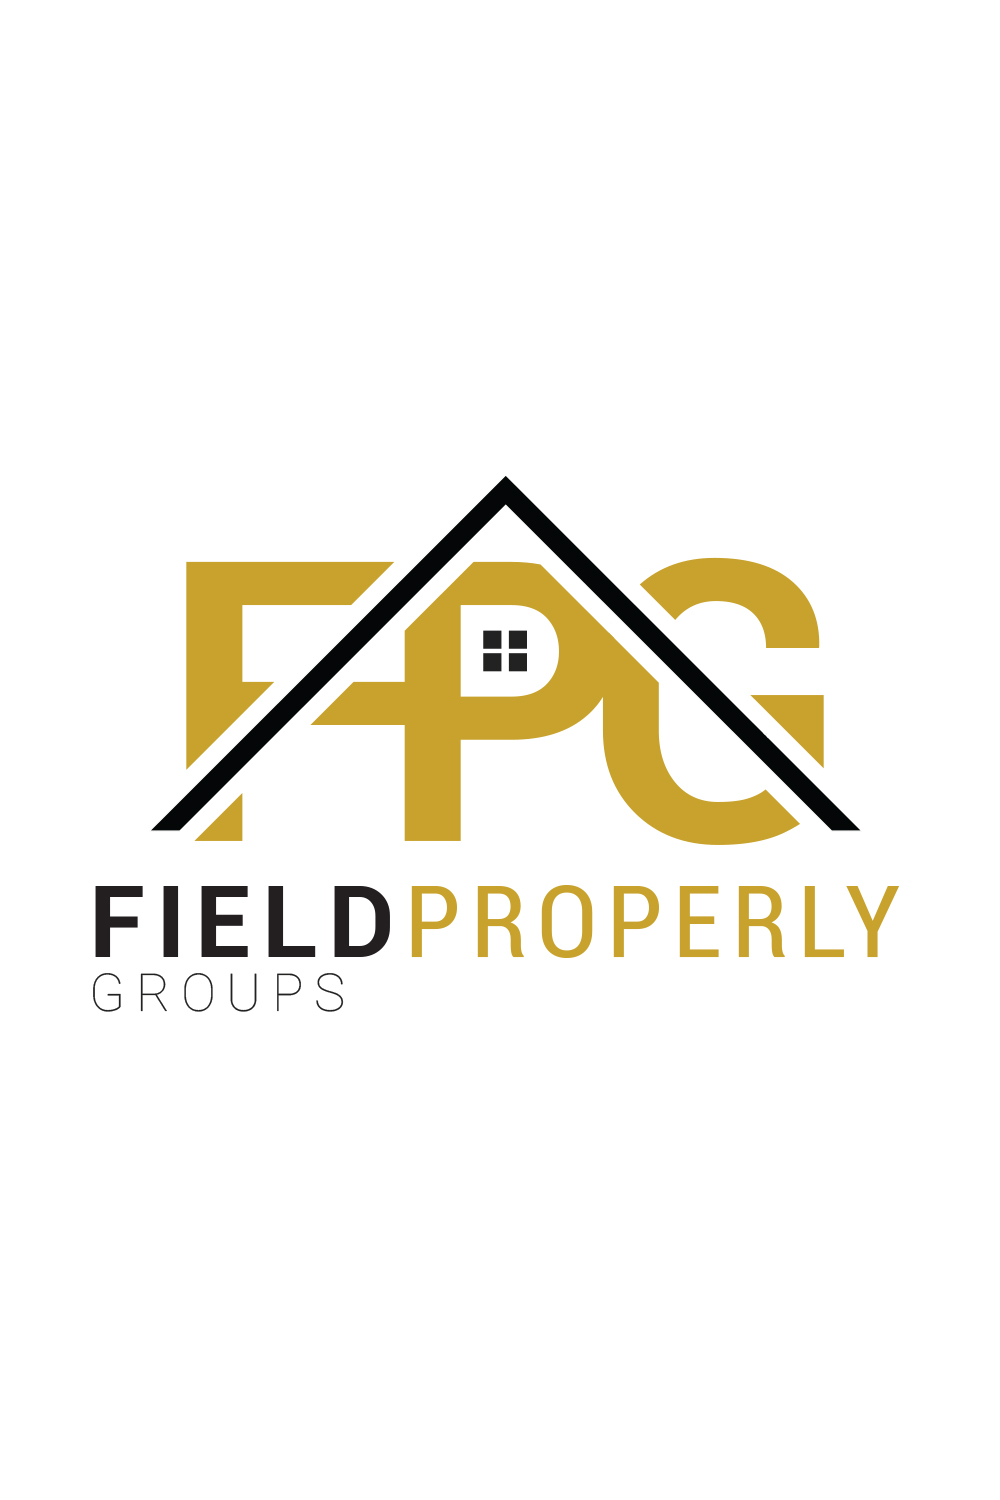 Letter FPG Real estate logo design pinterest preview image.